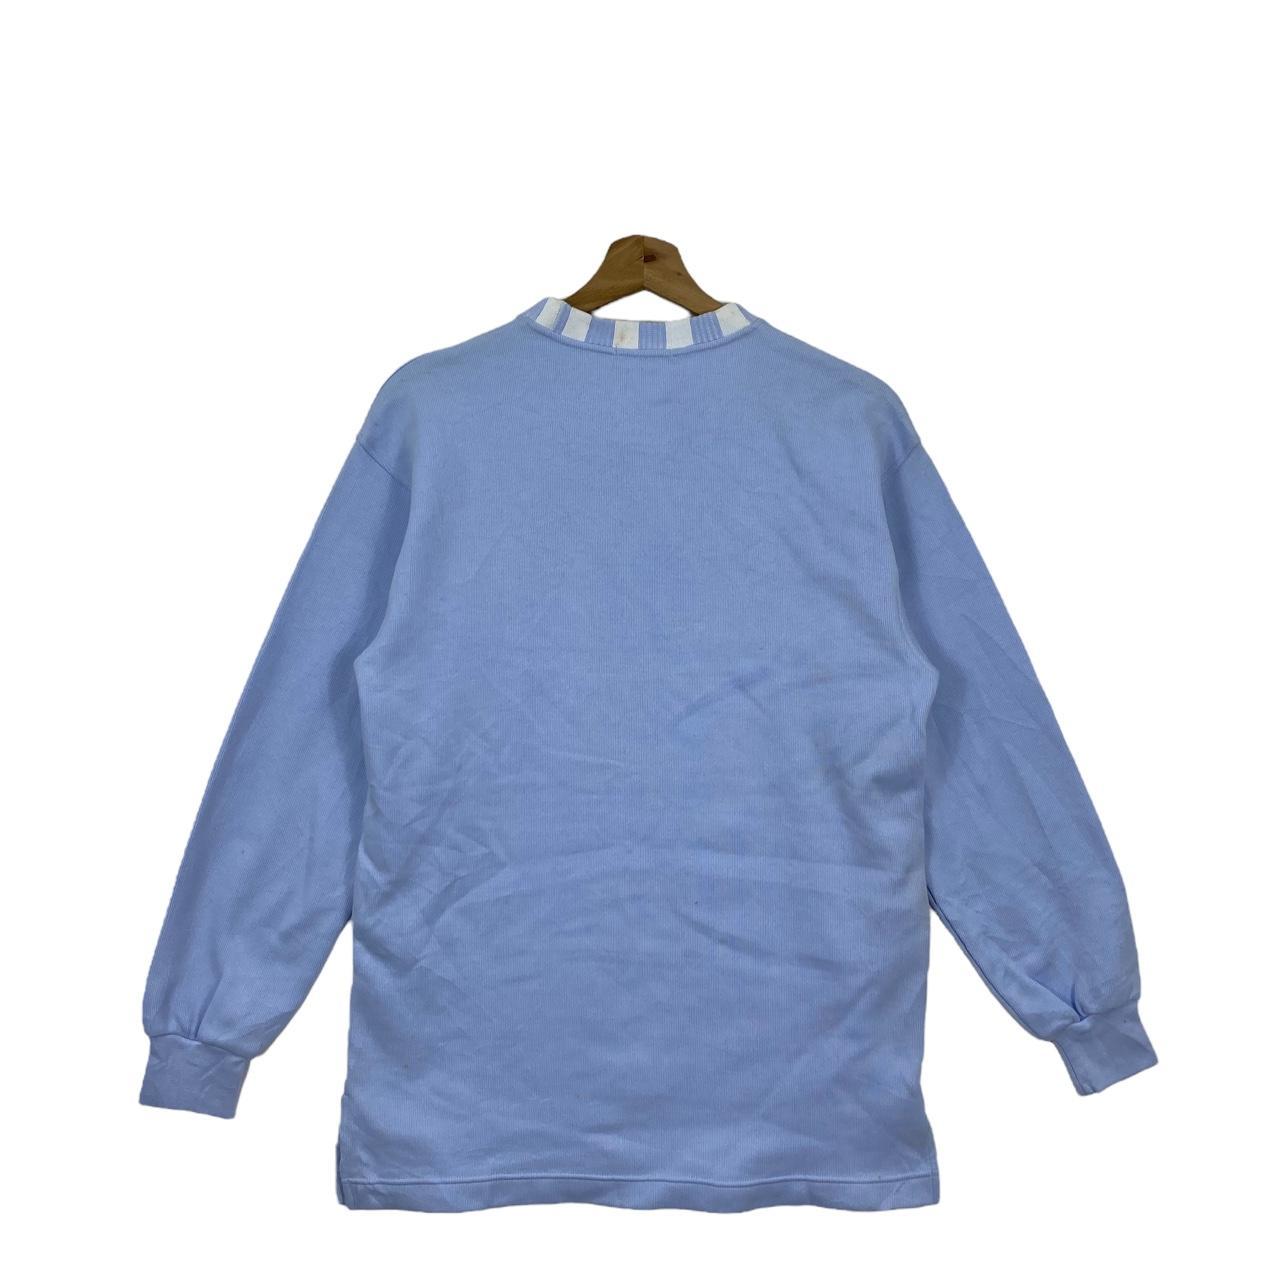 Courrèges Women's Blue Sweatshirt (6)